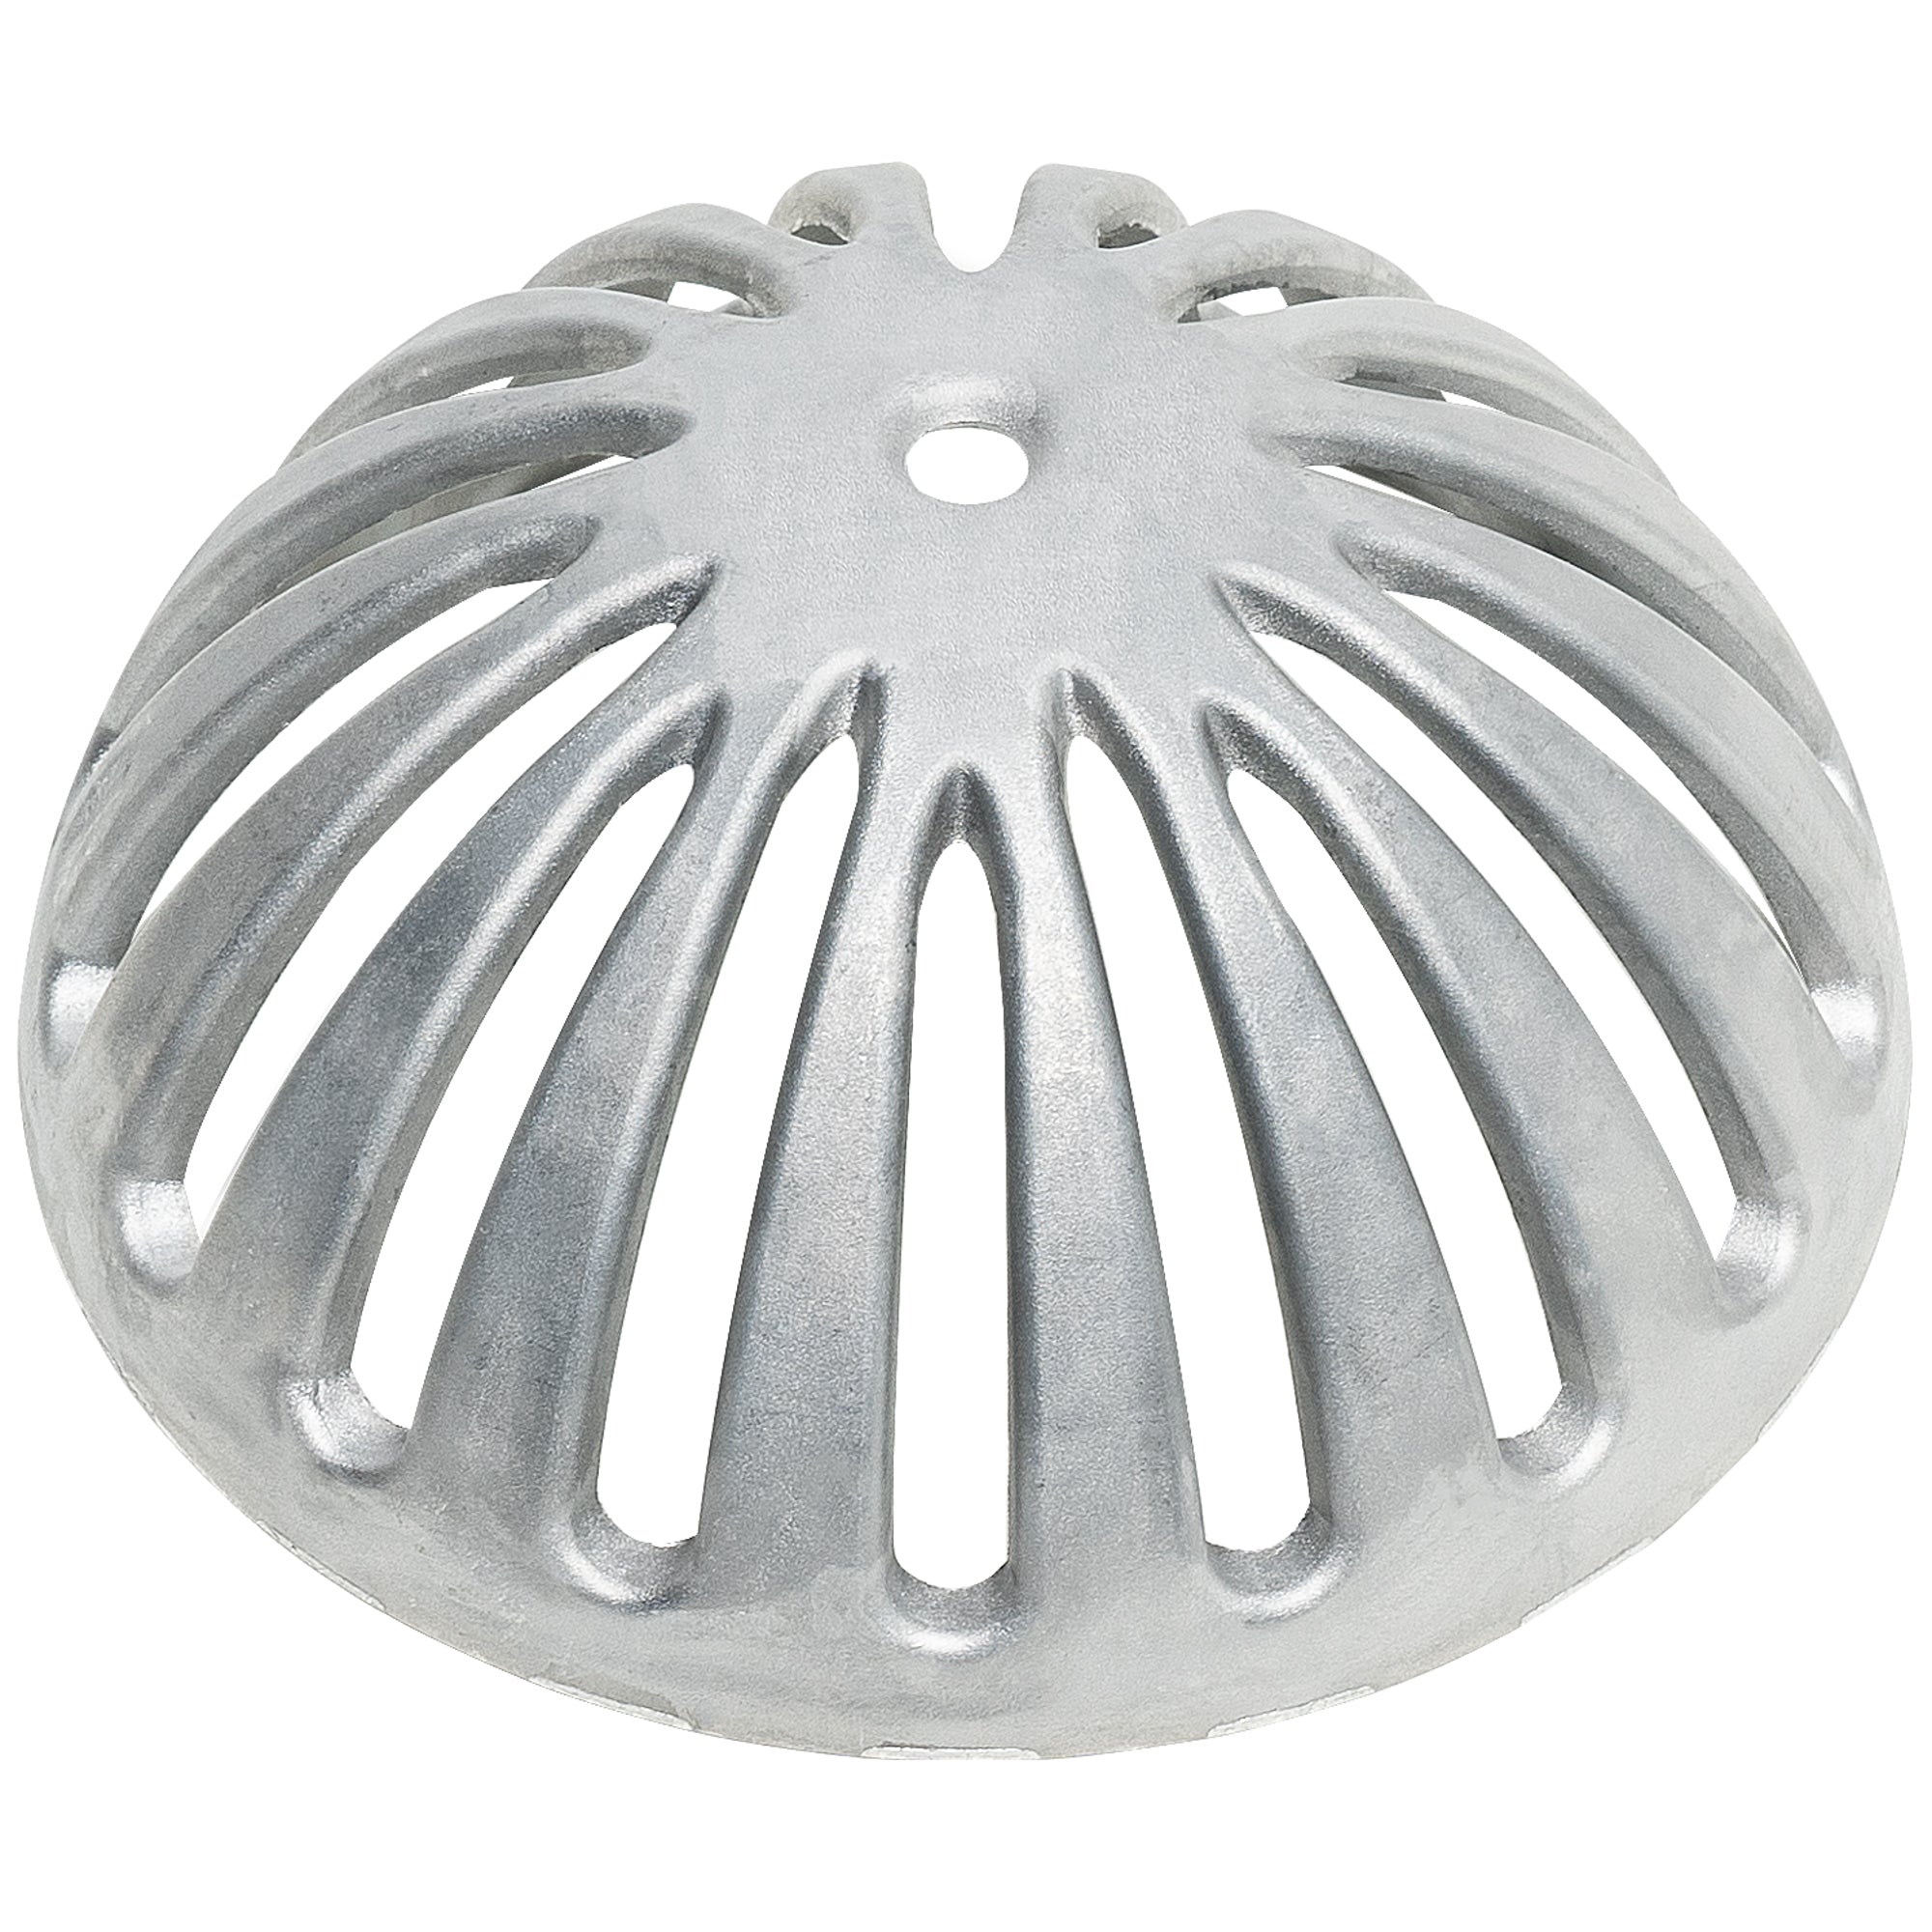 GSW FS-DS Aluminum Dome Strainer for 12" Floor Sink. 5-1/4" Diameter